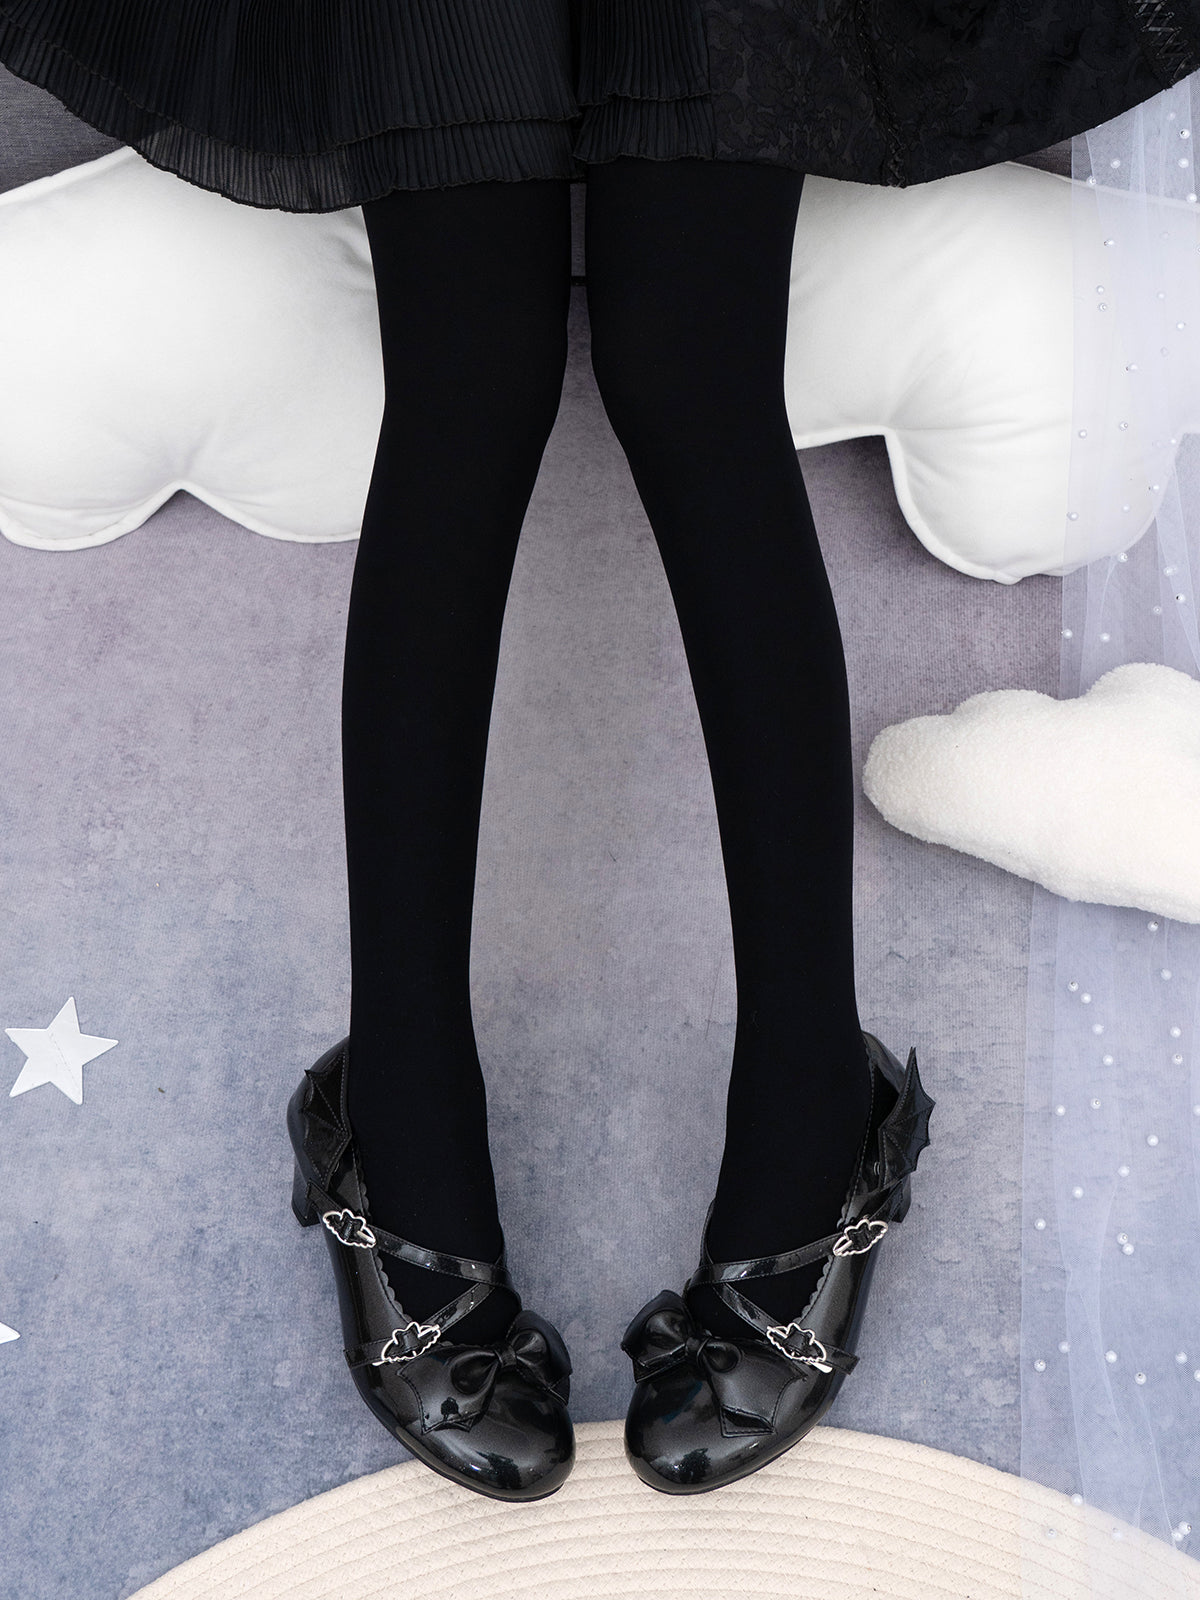 Yidhra~120D Daily Lolita Solid Color Velvet Spring Leggings   